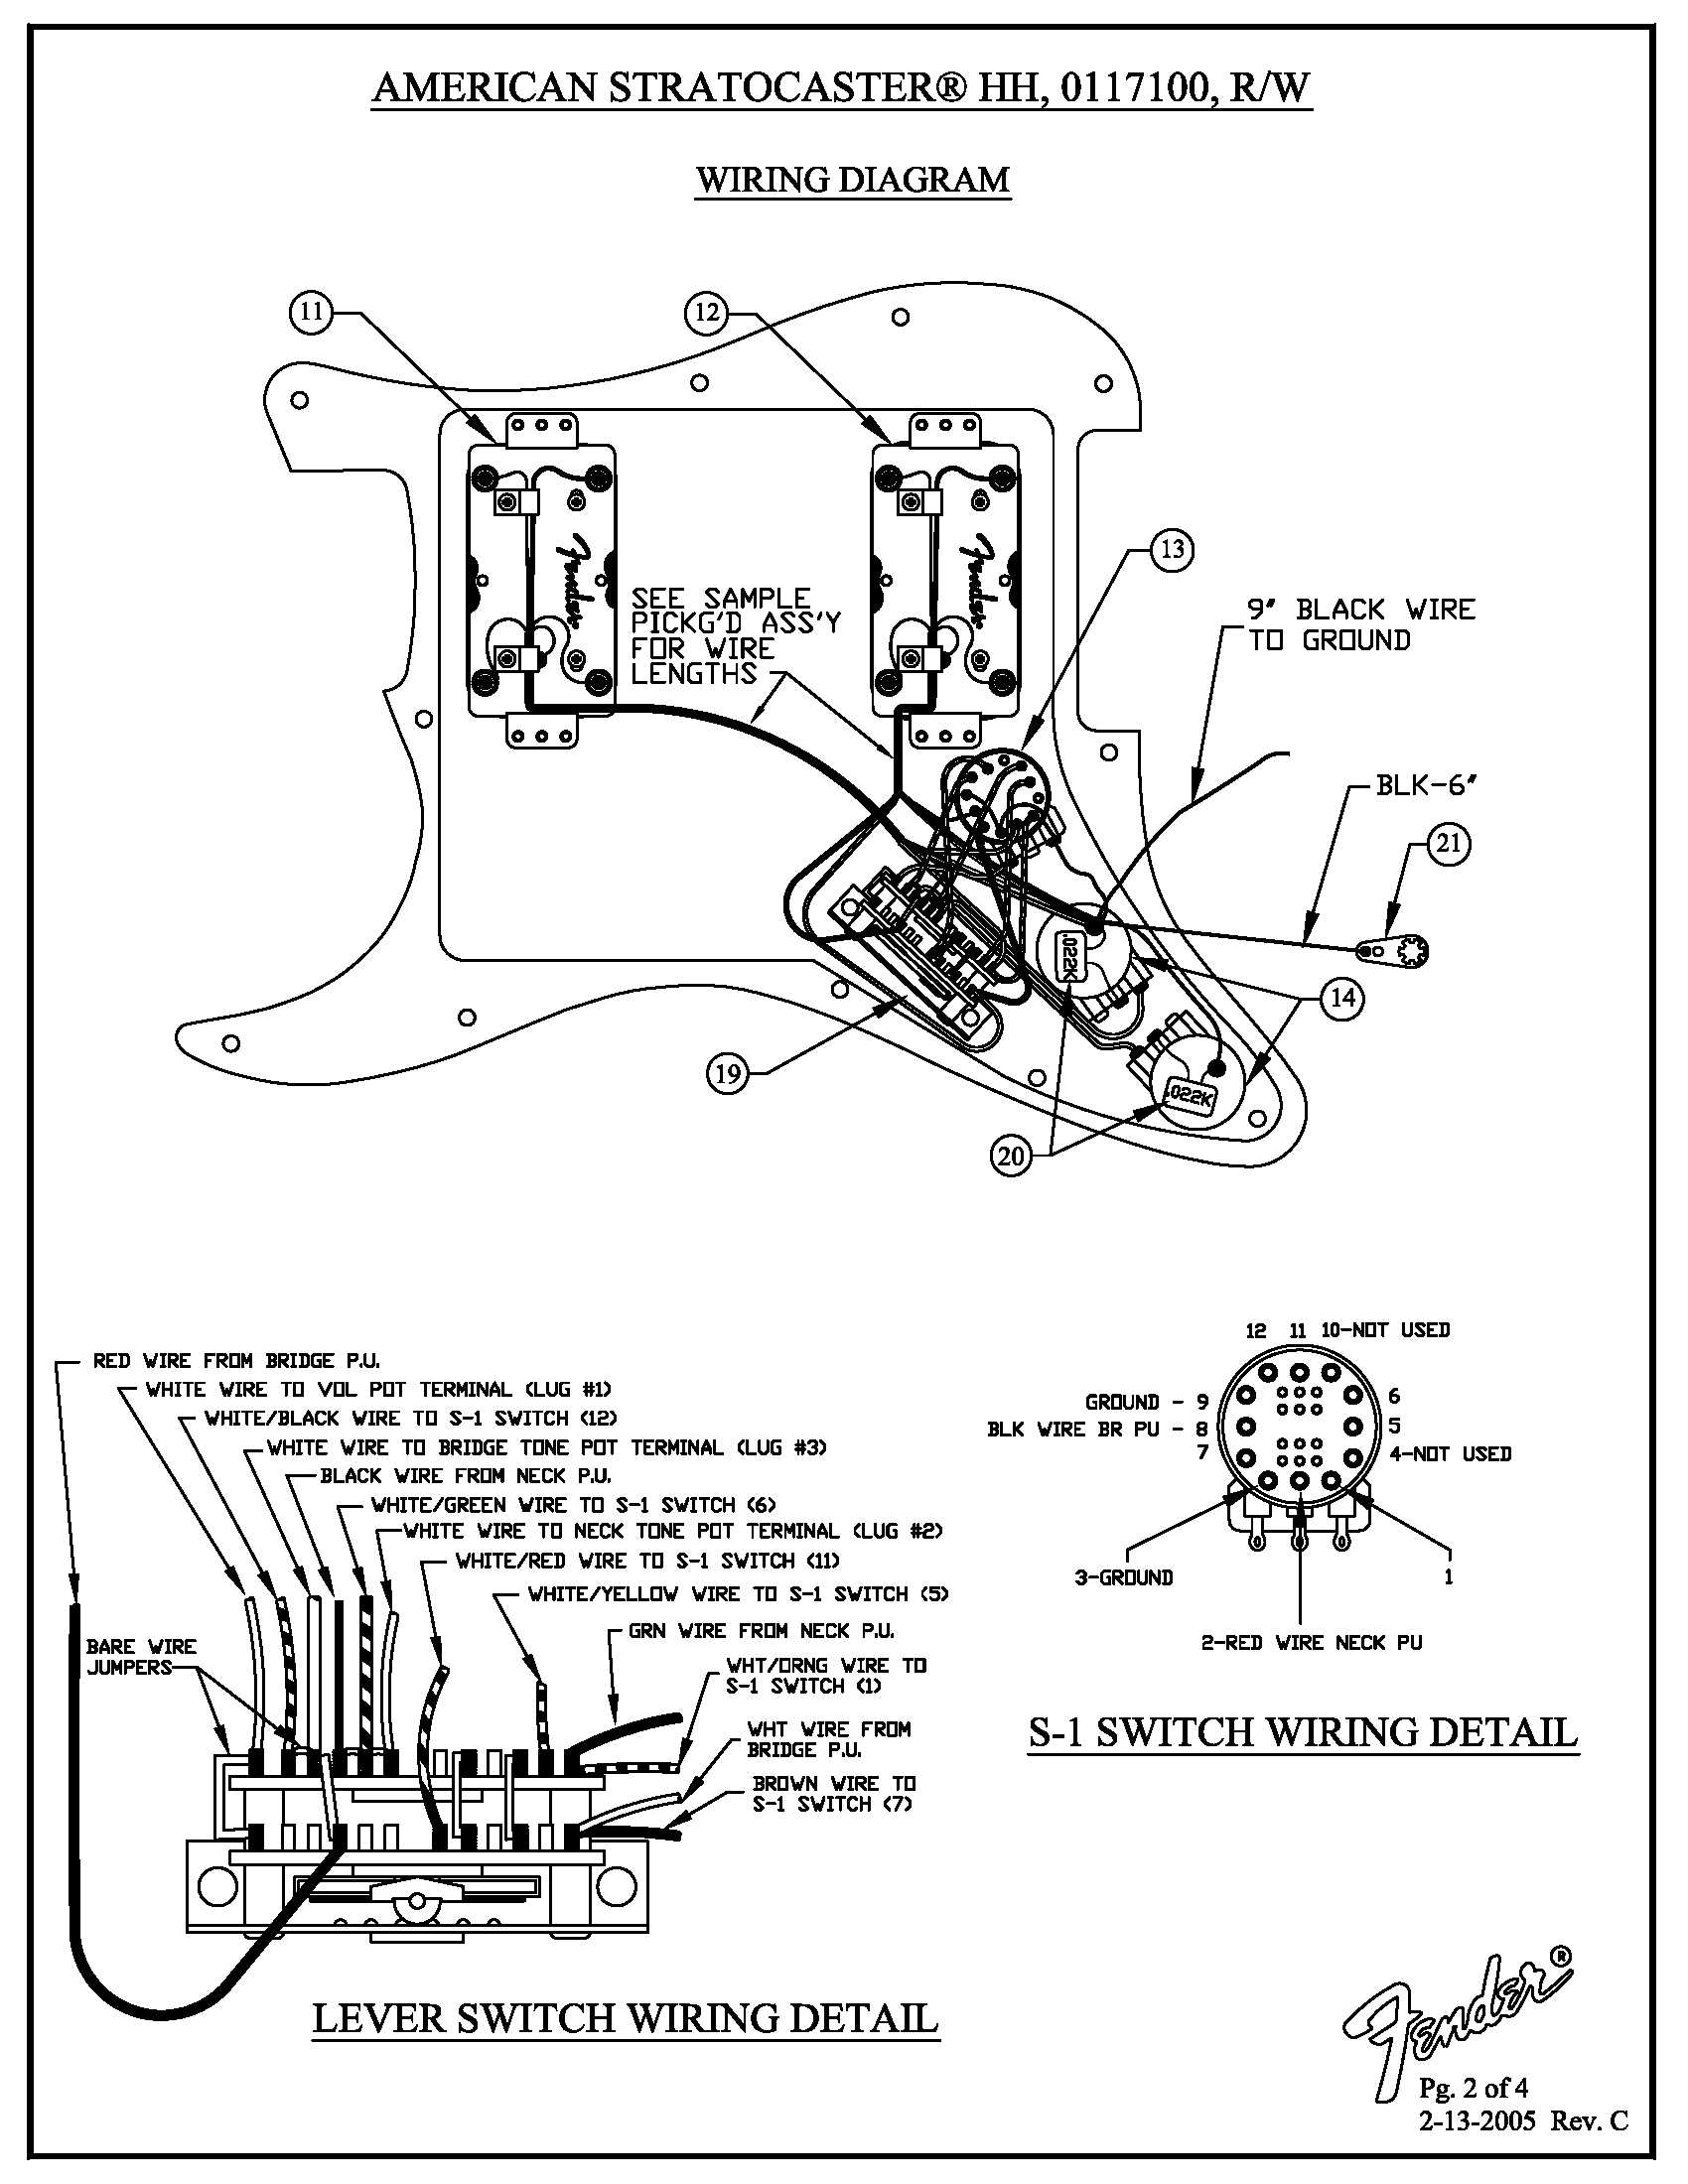 American Standard Stratocaster HH S-1 Wiring Diagram 0117100 · Customer